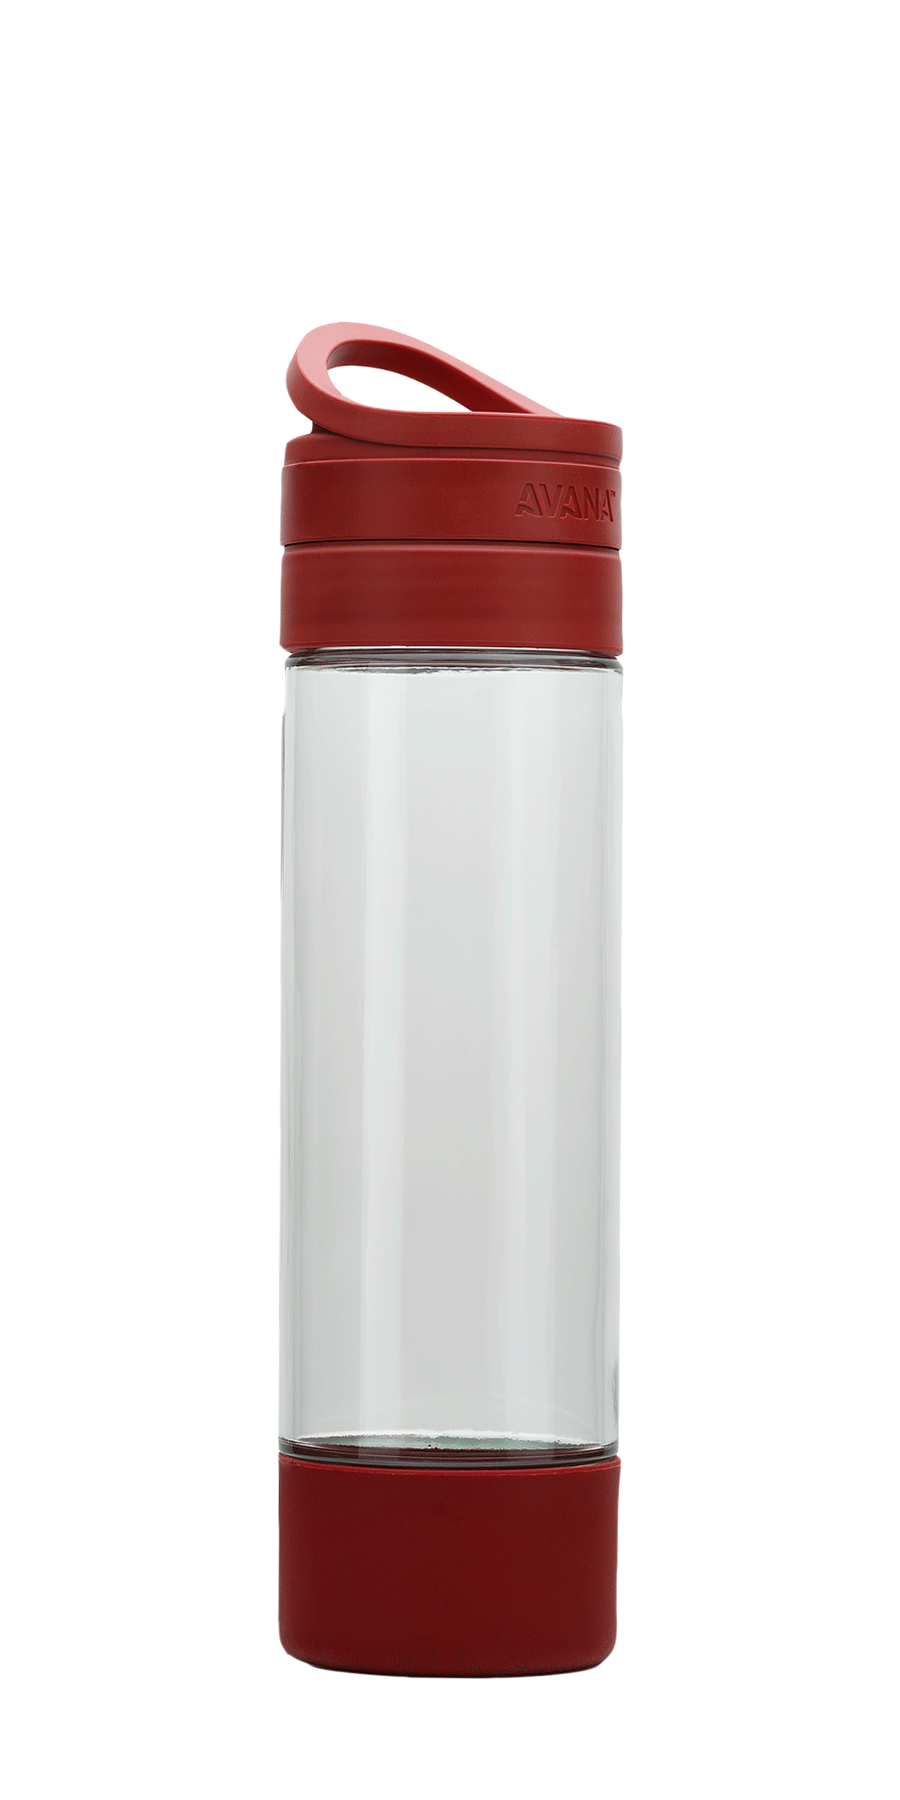 Avana Ashbury Insulated Stainless Steel 24 oz. Water Bottle Palm C03752 -  Best Buy